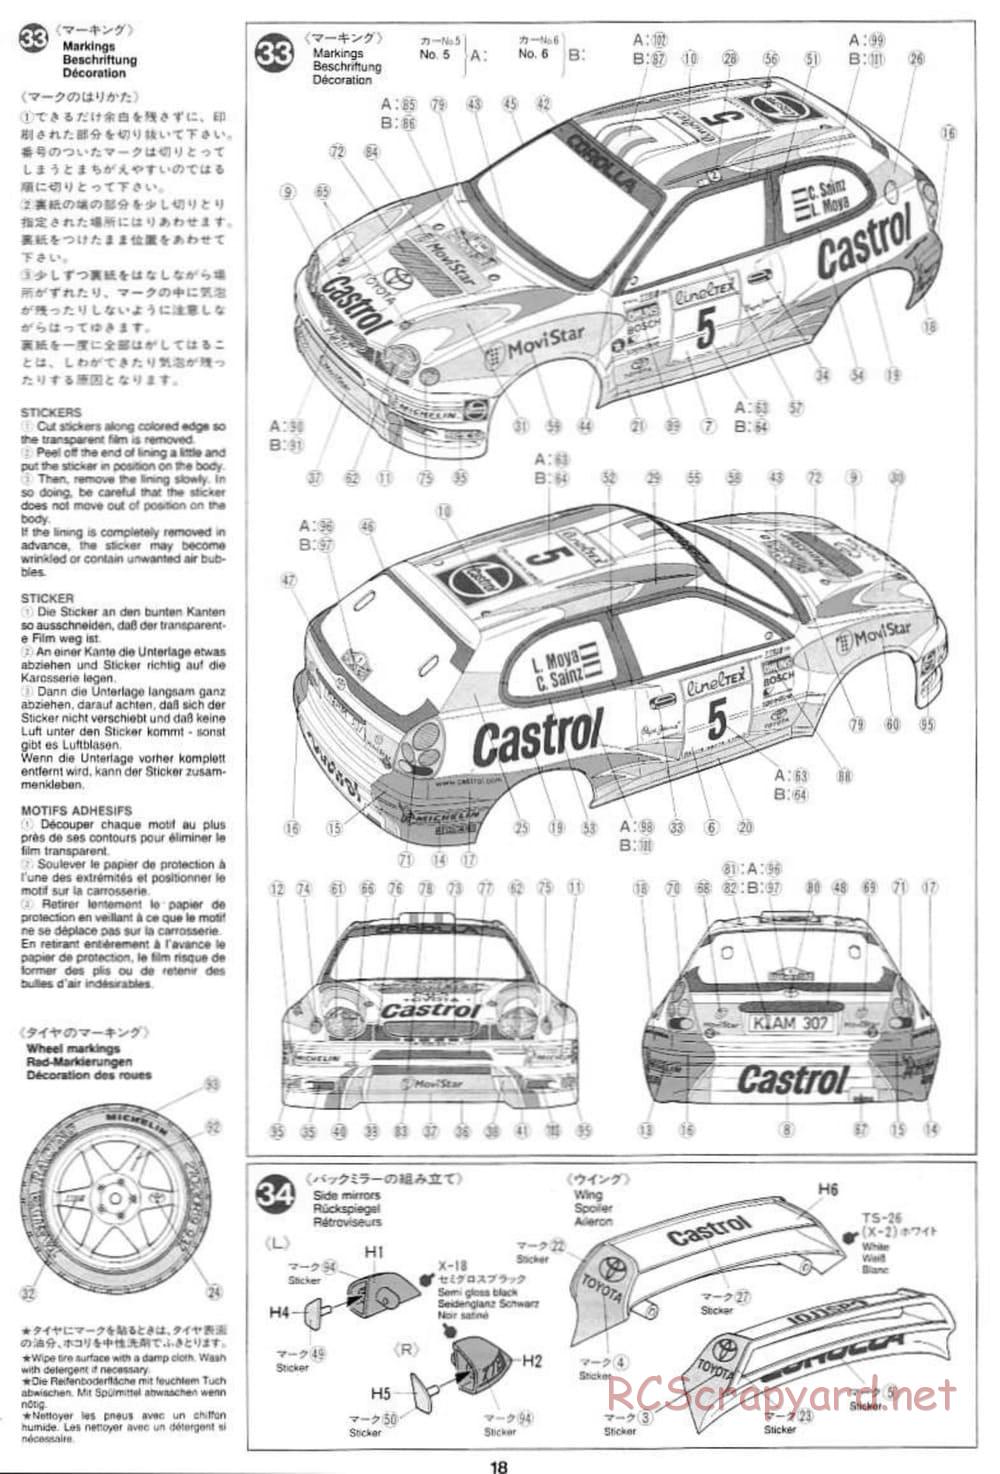 Tamiya - Toyota Corolla WRC - TA-03FS Chassis - Manual - Page 18